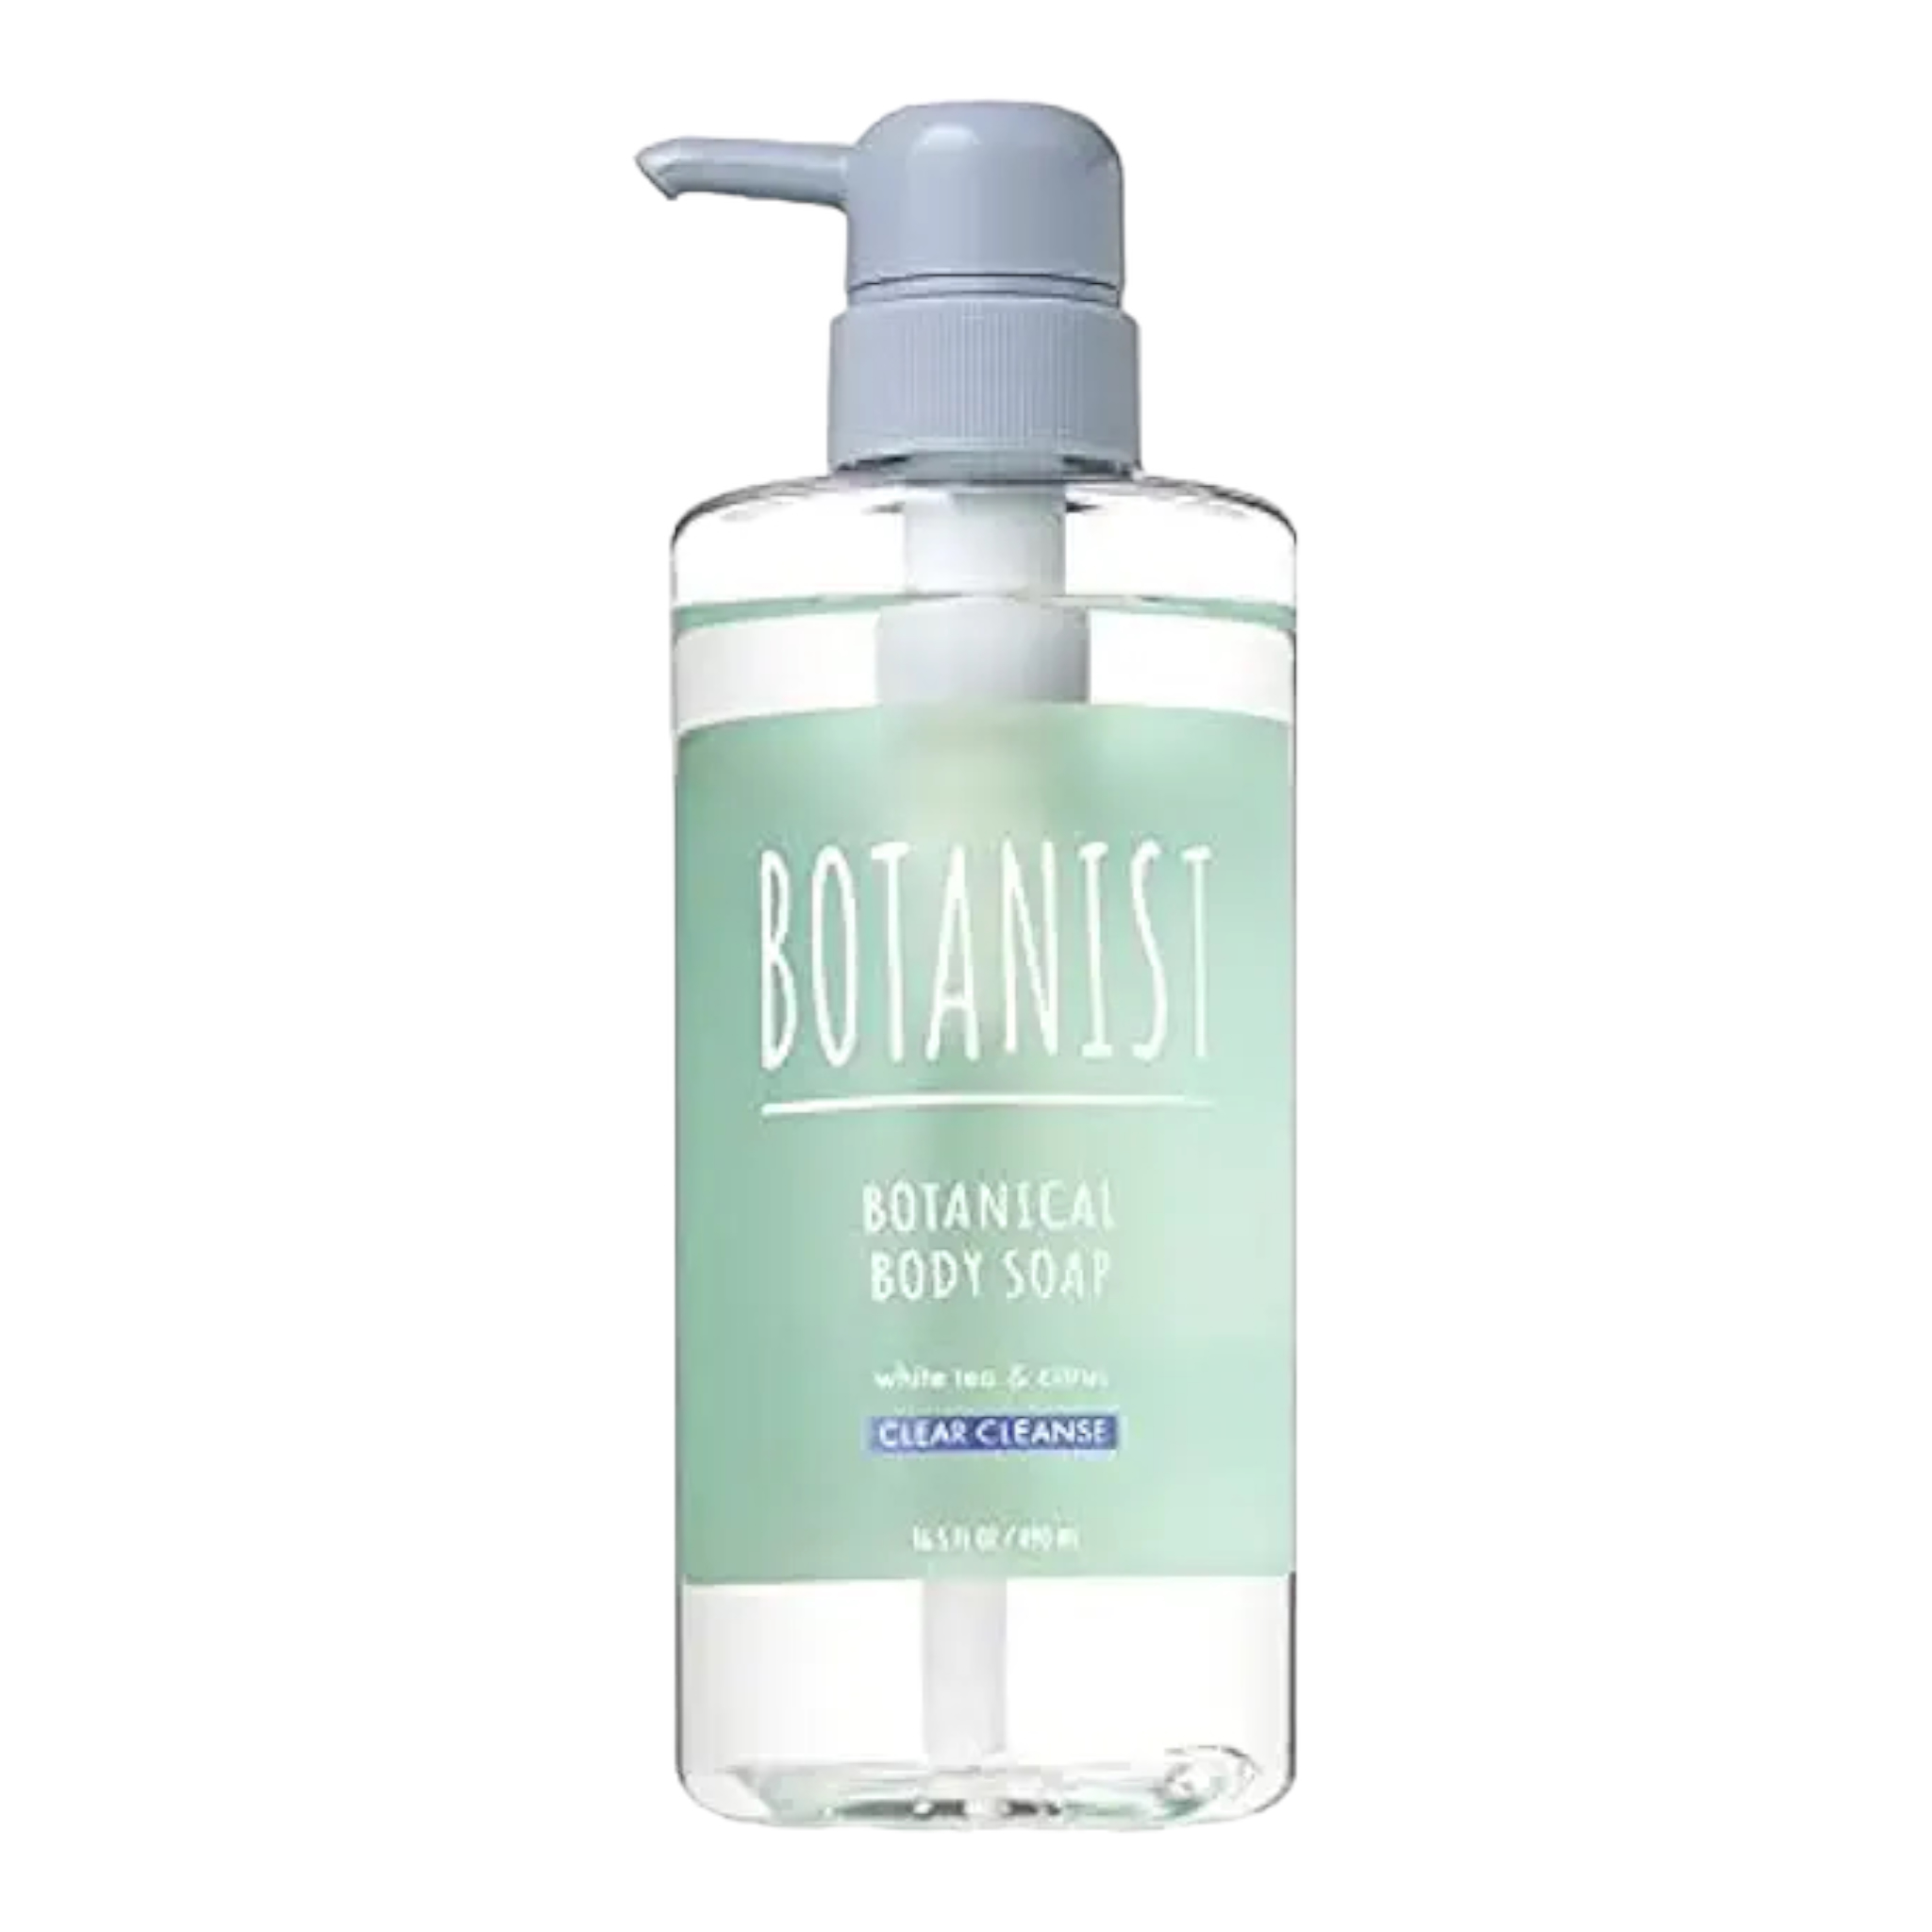 BOTANIST(ボタニスト) ボタニカルリフレッシュボディーソープ クリアクレンズ ホワイトティーとシトラスの香り